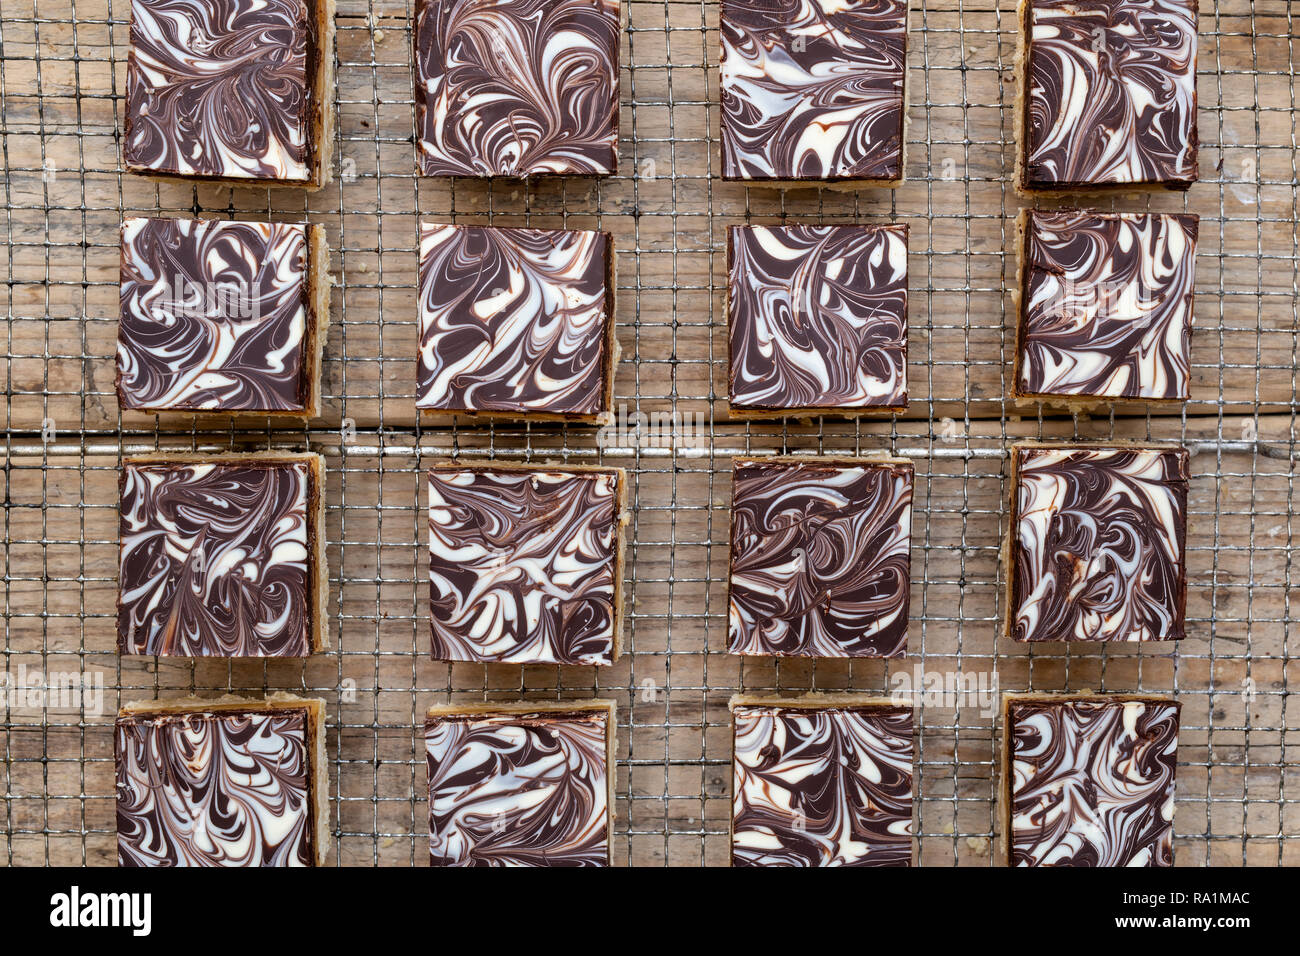 Caramel Shortbread/Millionäre shortbread Quadrate auf einem Gitter Stockfoto